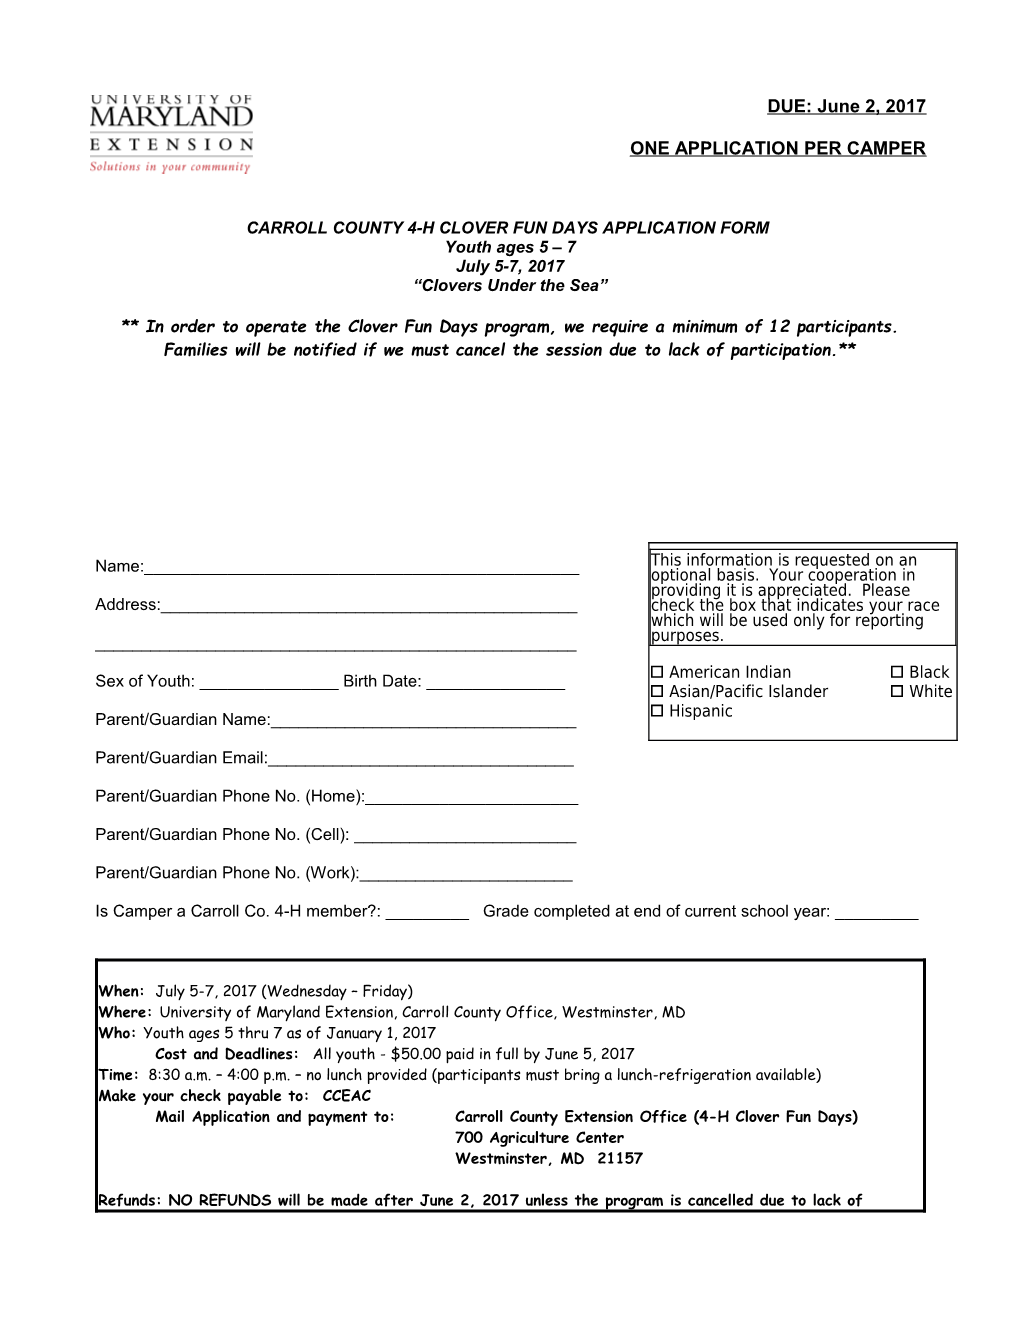 Carroll County 4-H Clover Fun Days Application Form